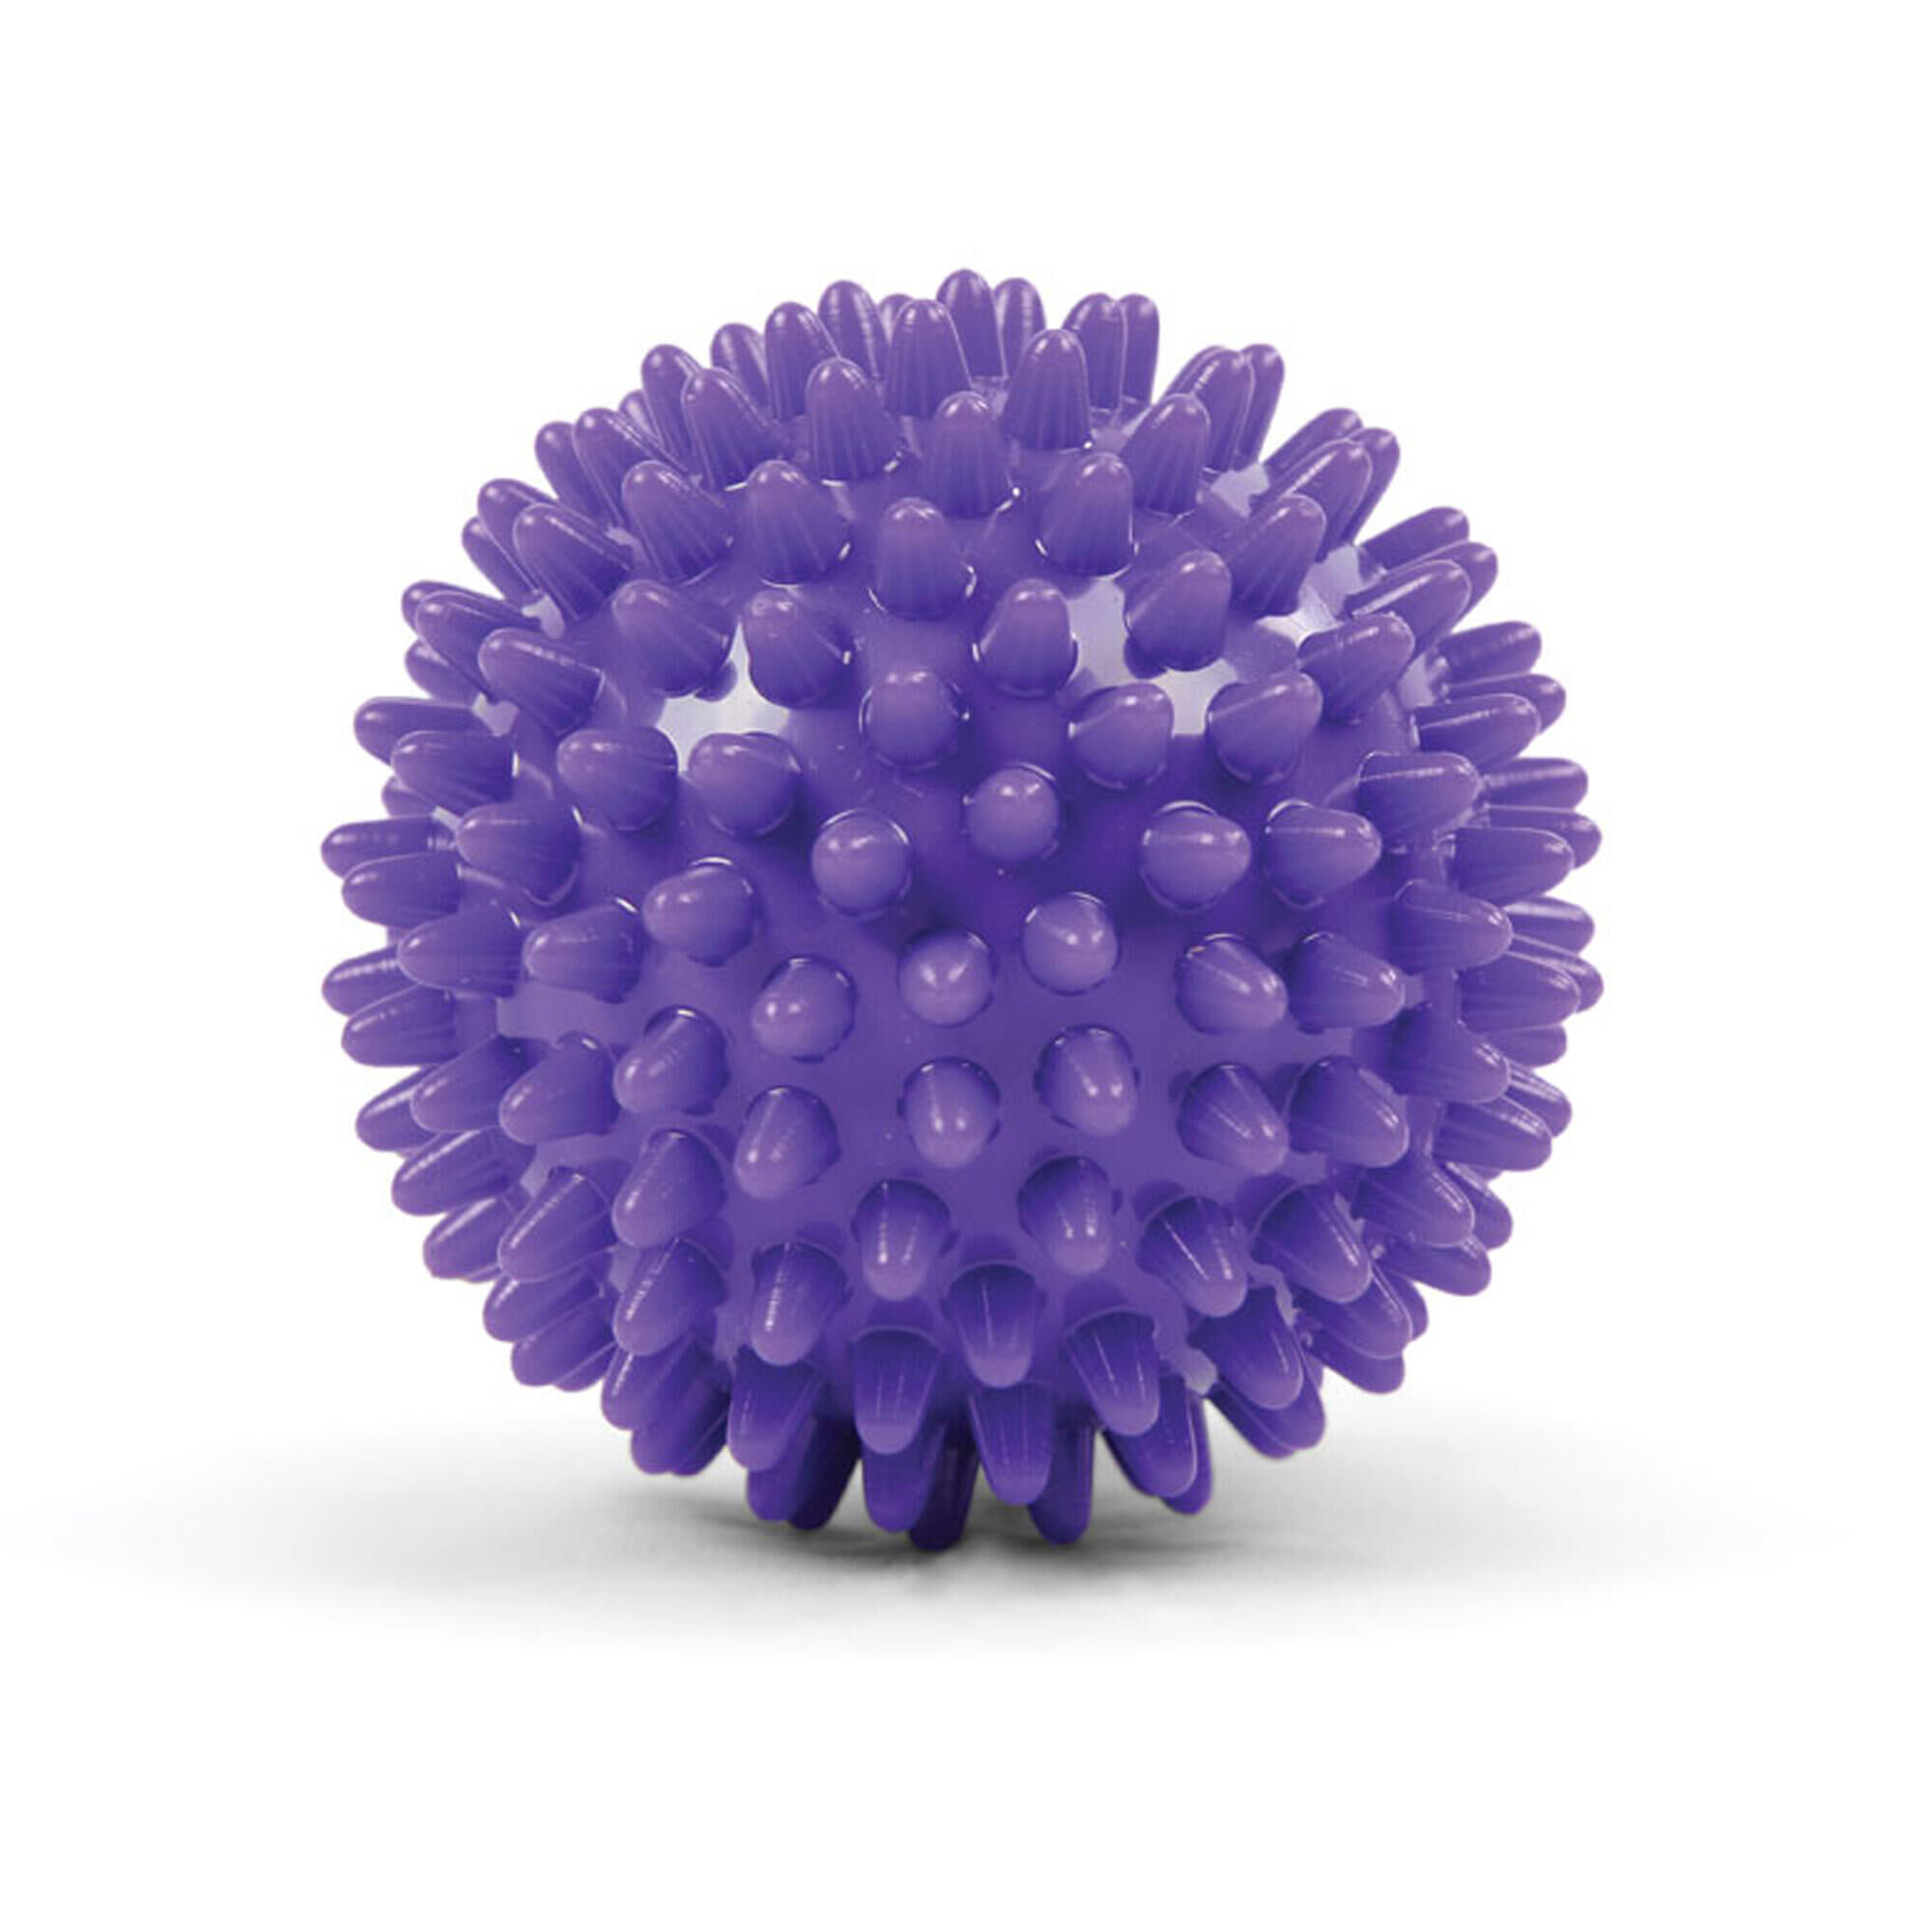 FITNESS-MAD Spiked Massage Ball (Purple)